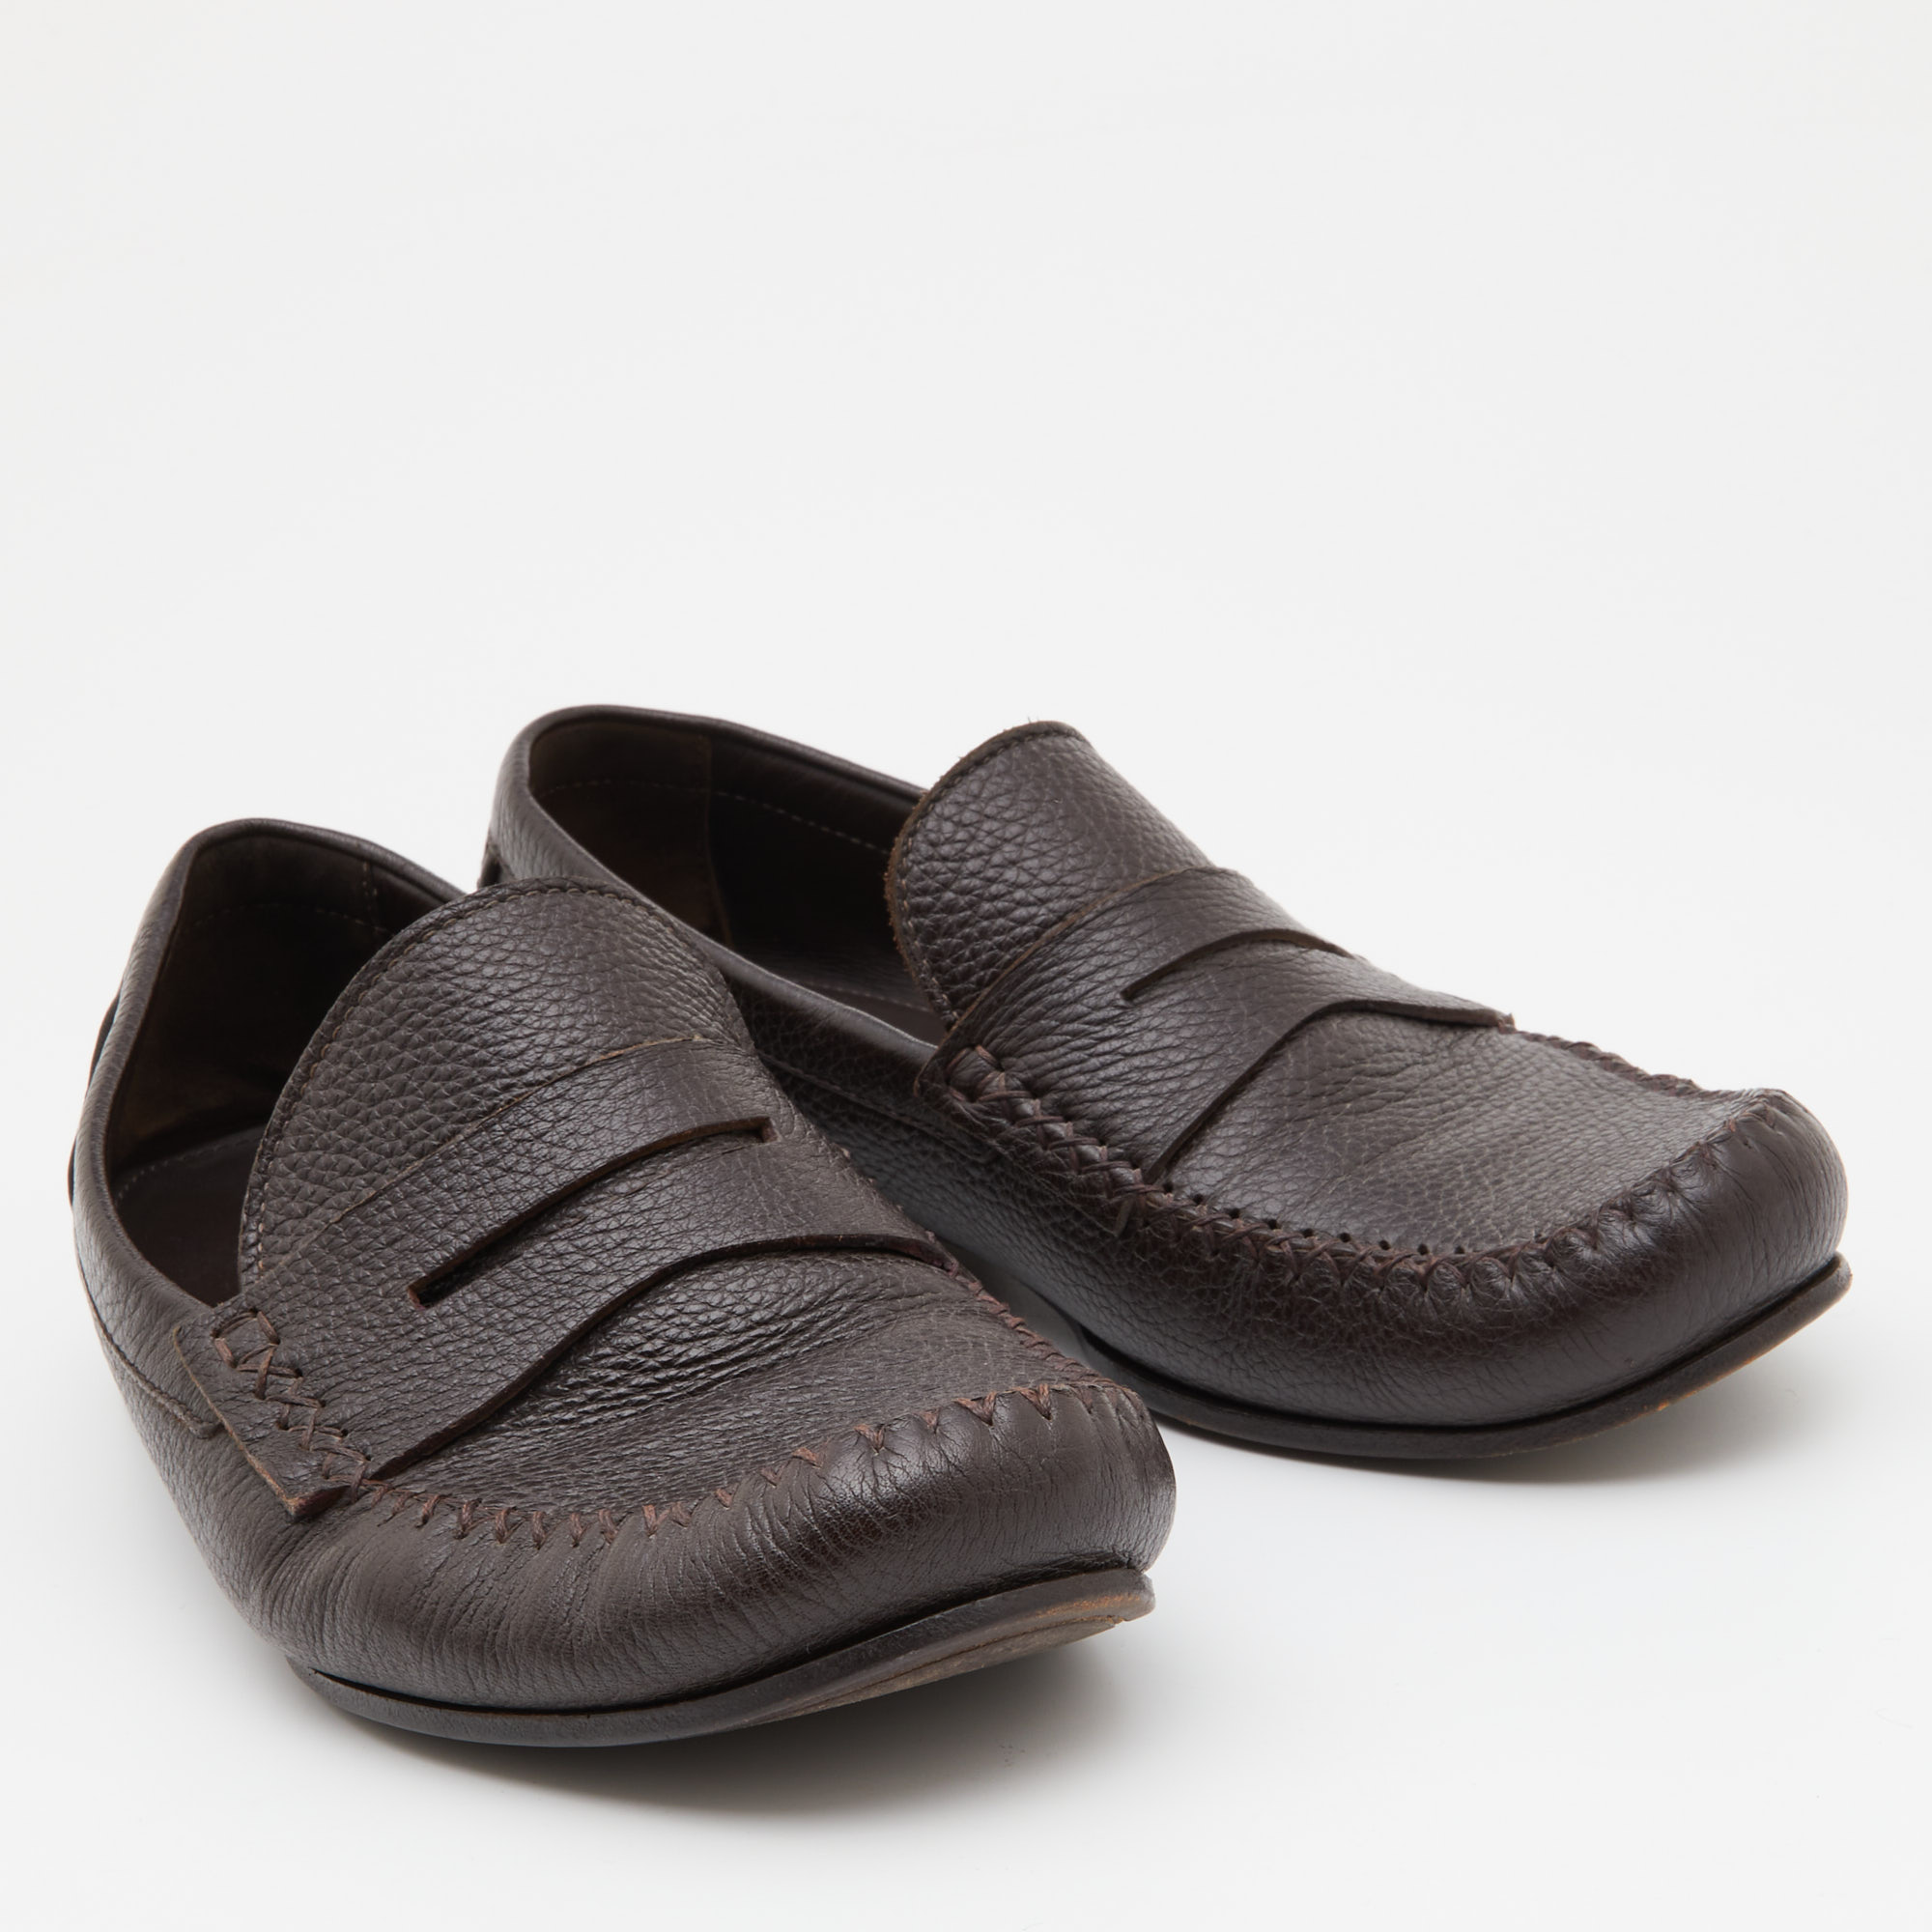 Bottega Veneta Dark Brown Leather Penny Slip On Loafers Size 42